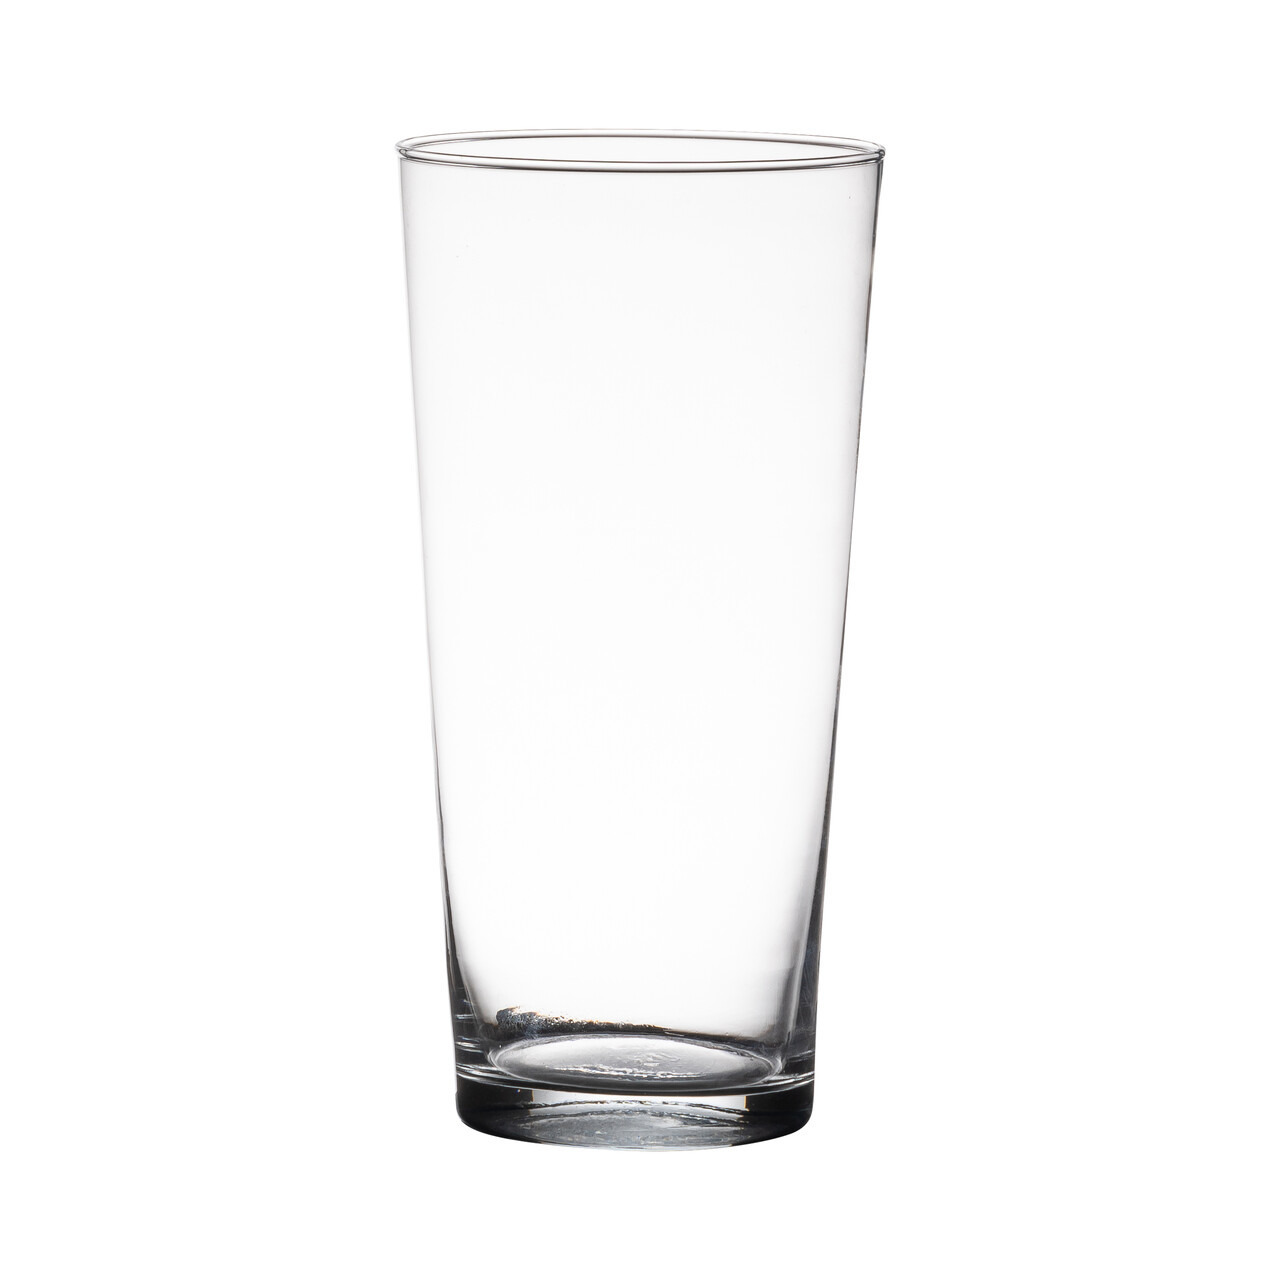 Transparante home-basics conische vaas/vazen van glas 29 x 16 cm